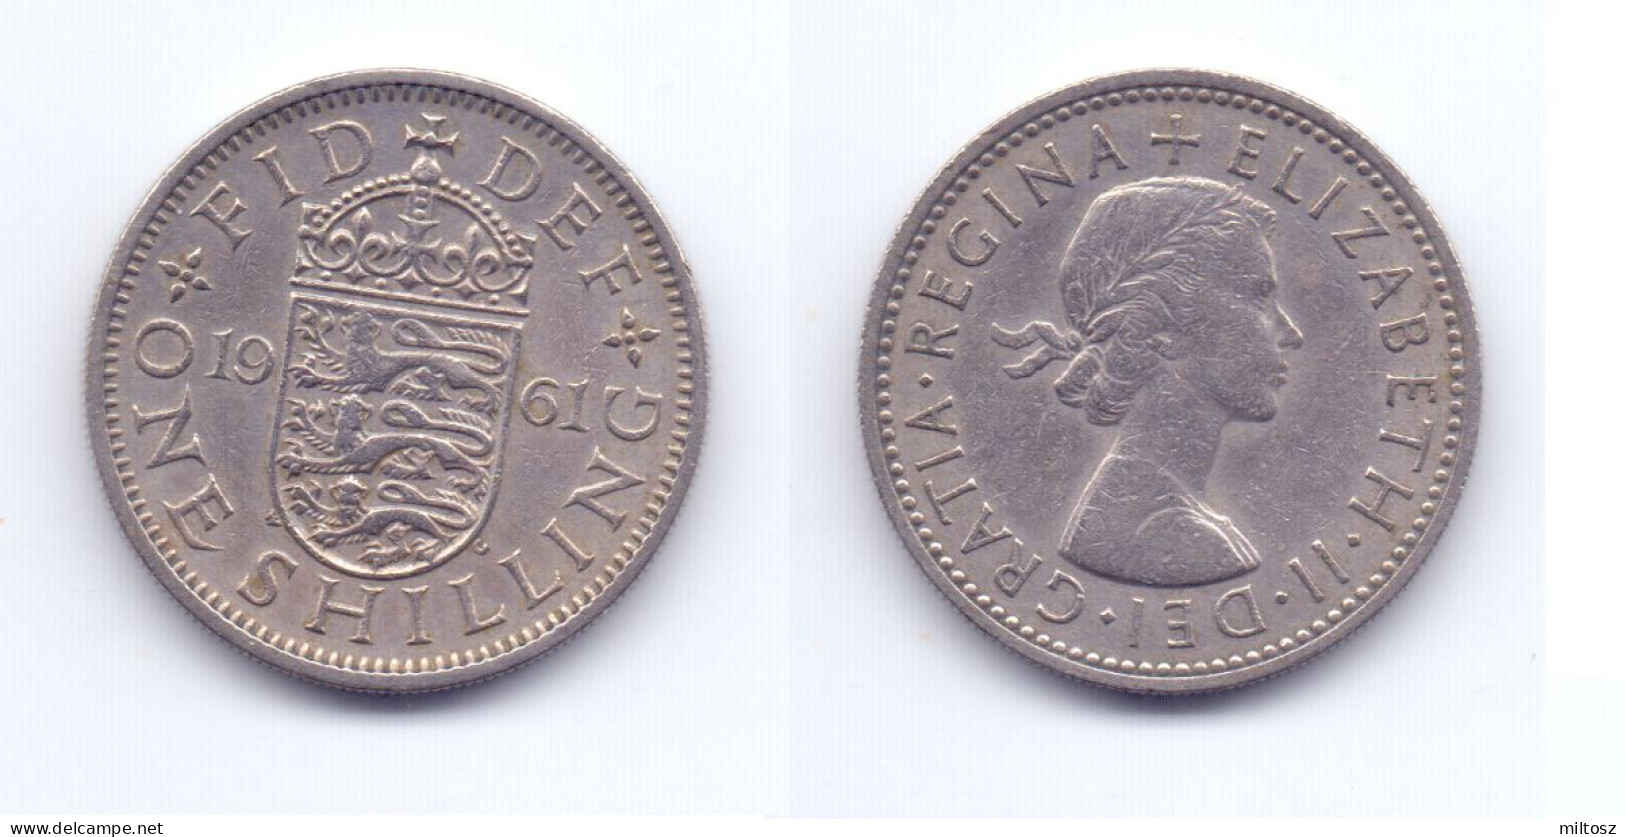 Great Britain 1 Shilling 1961 English Crest - I. 1 Shilling